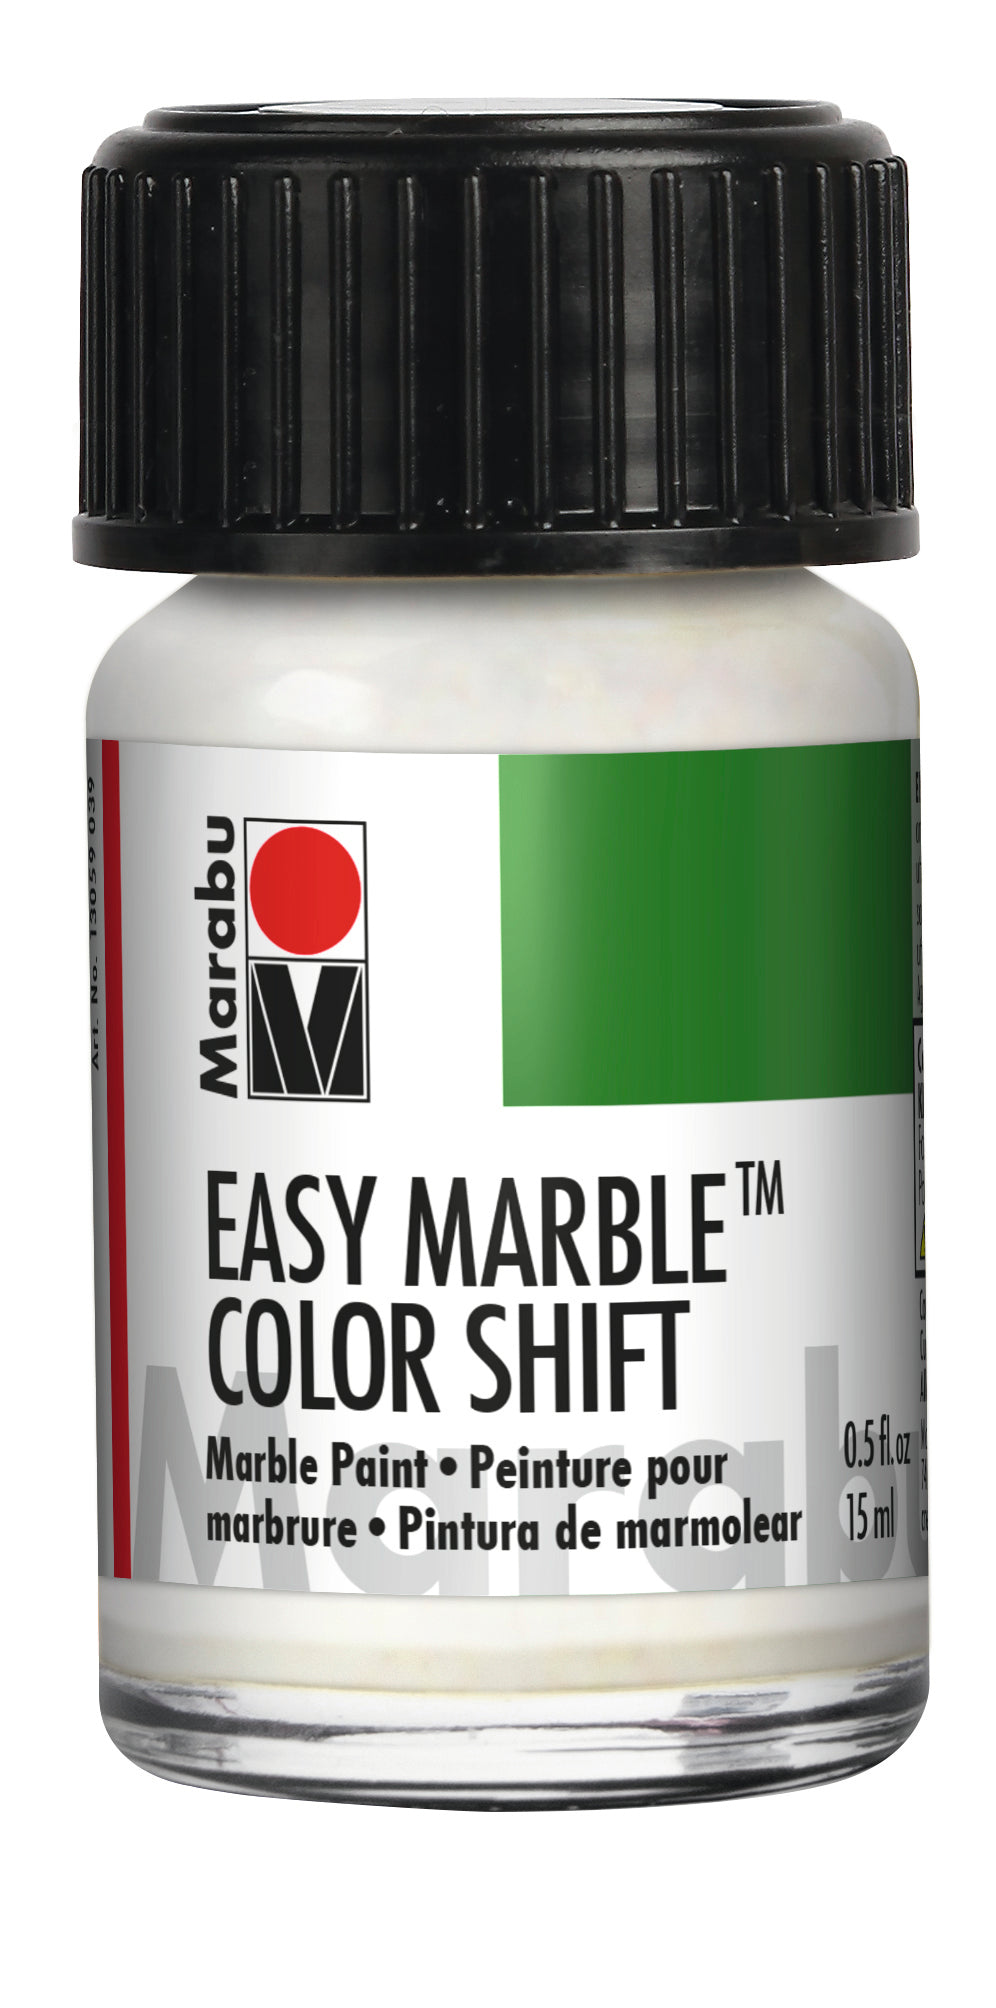 Glitter Violet/Blue/Green Marabu Easy Marble 515